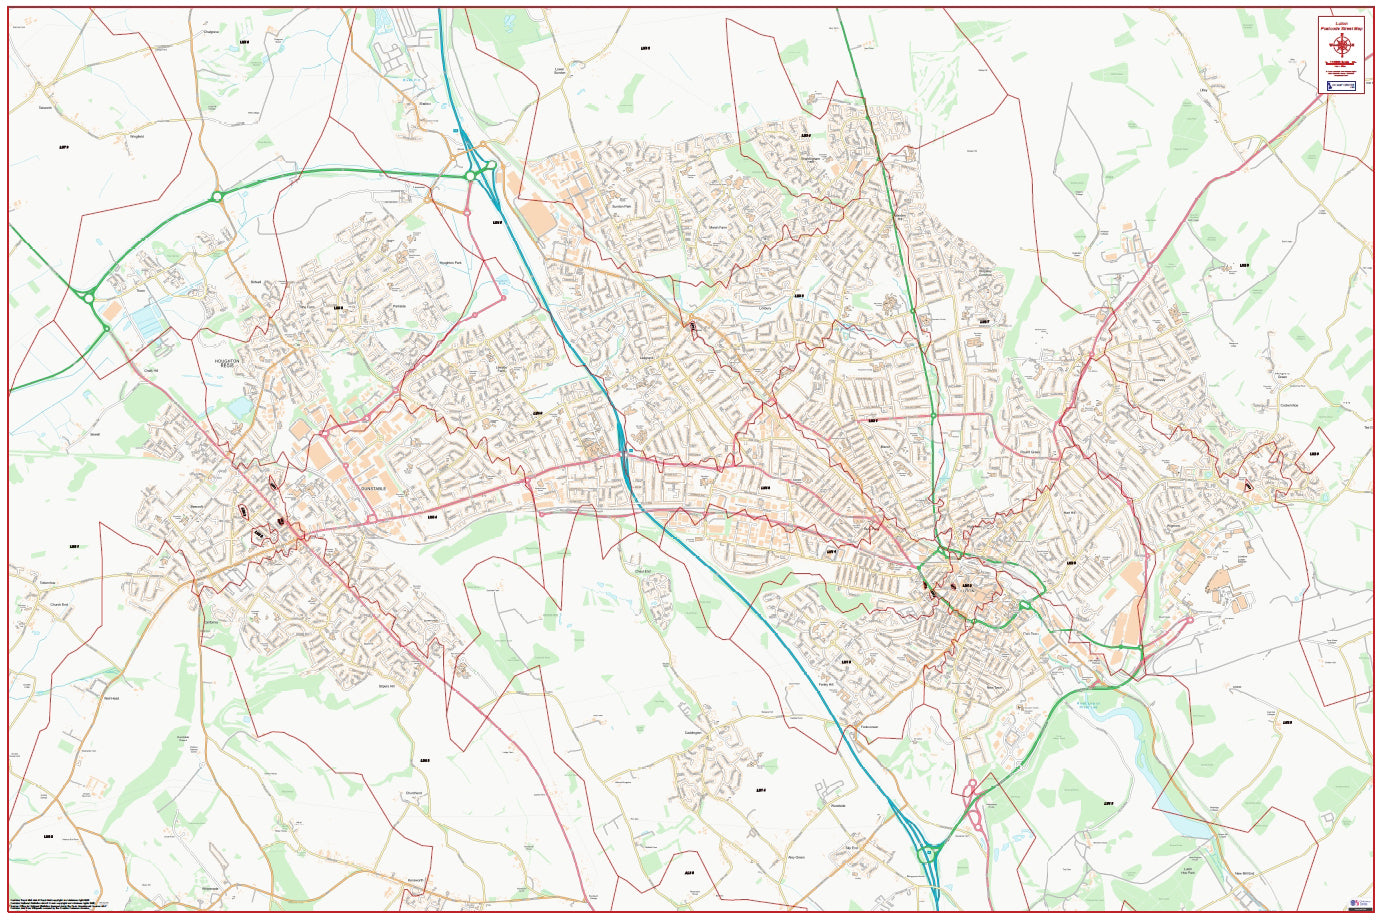 Central Luton Postcode City Street Map - Digital Download